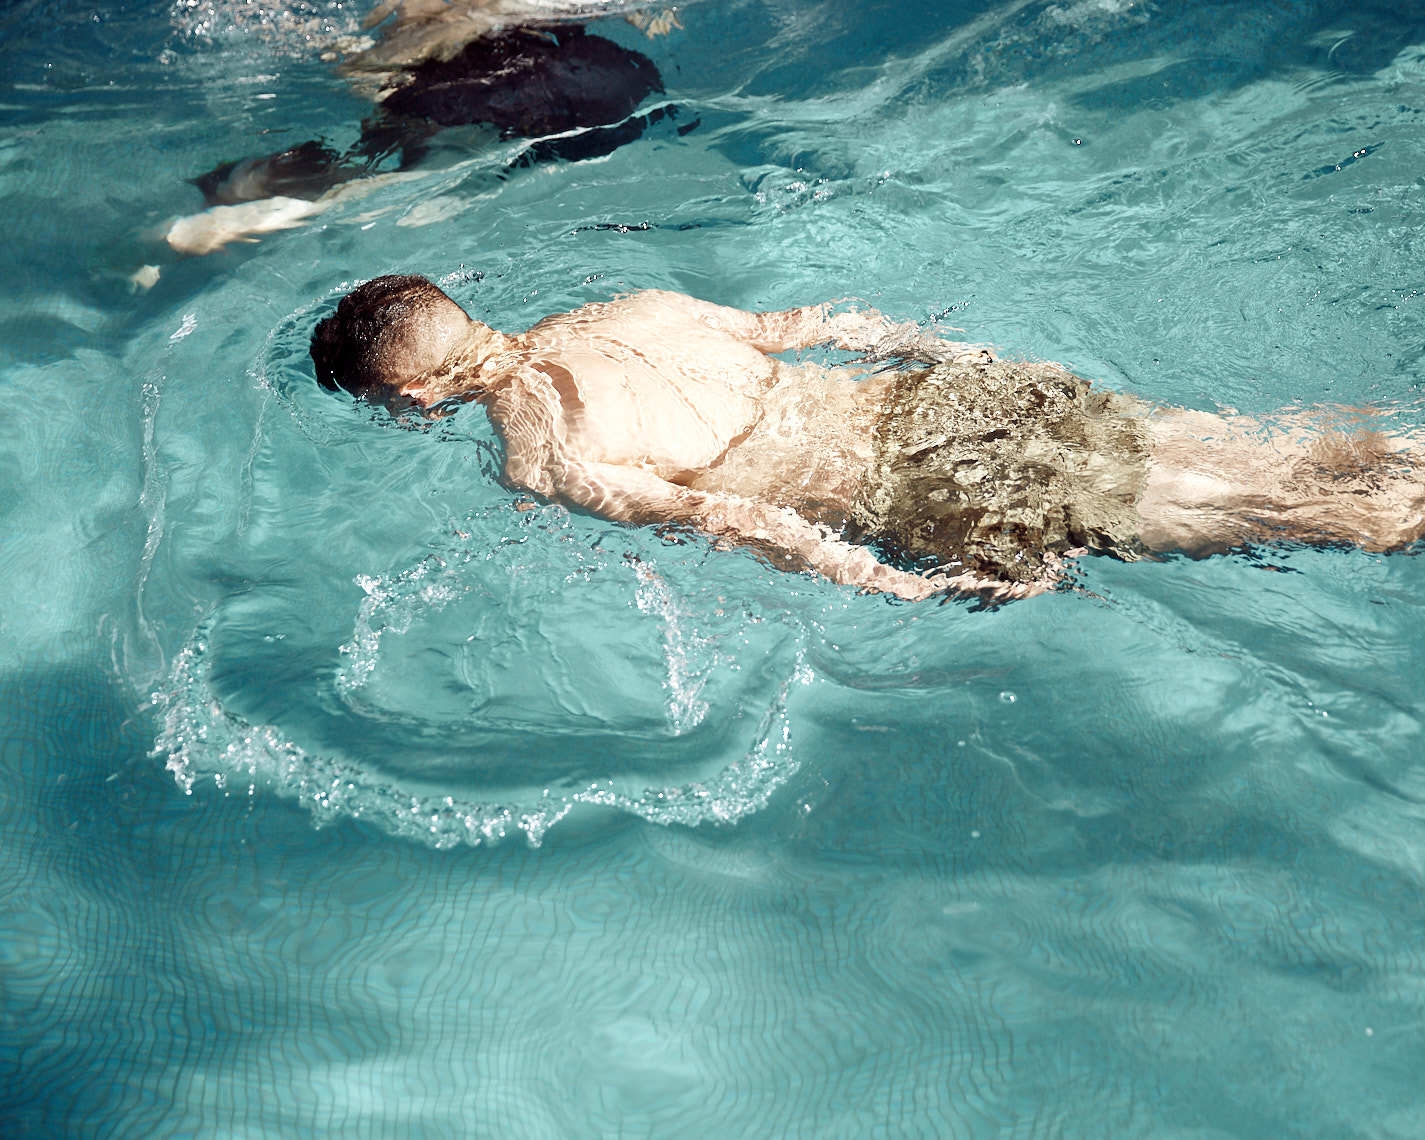 Boy in green trunks swimming in pool